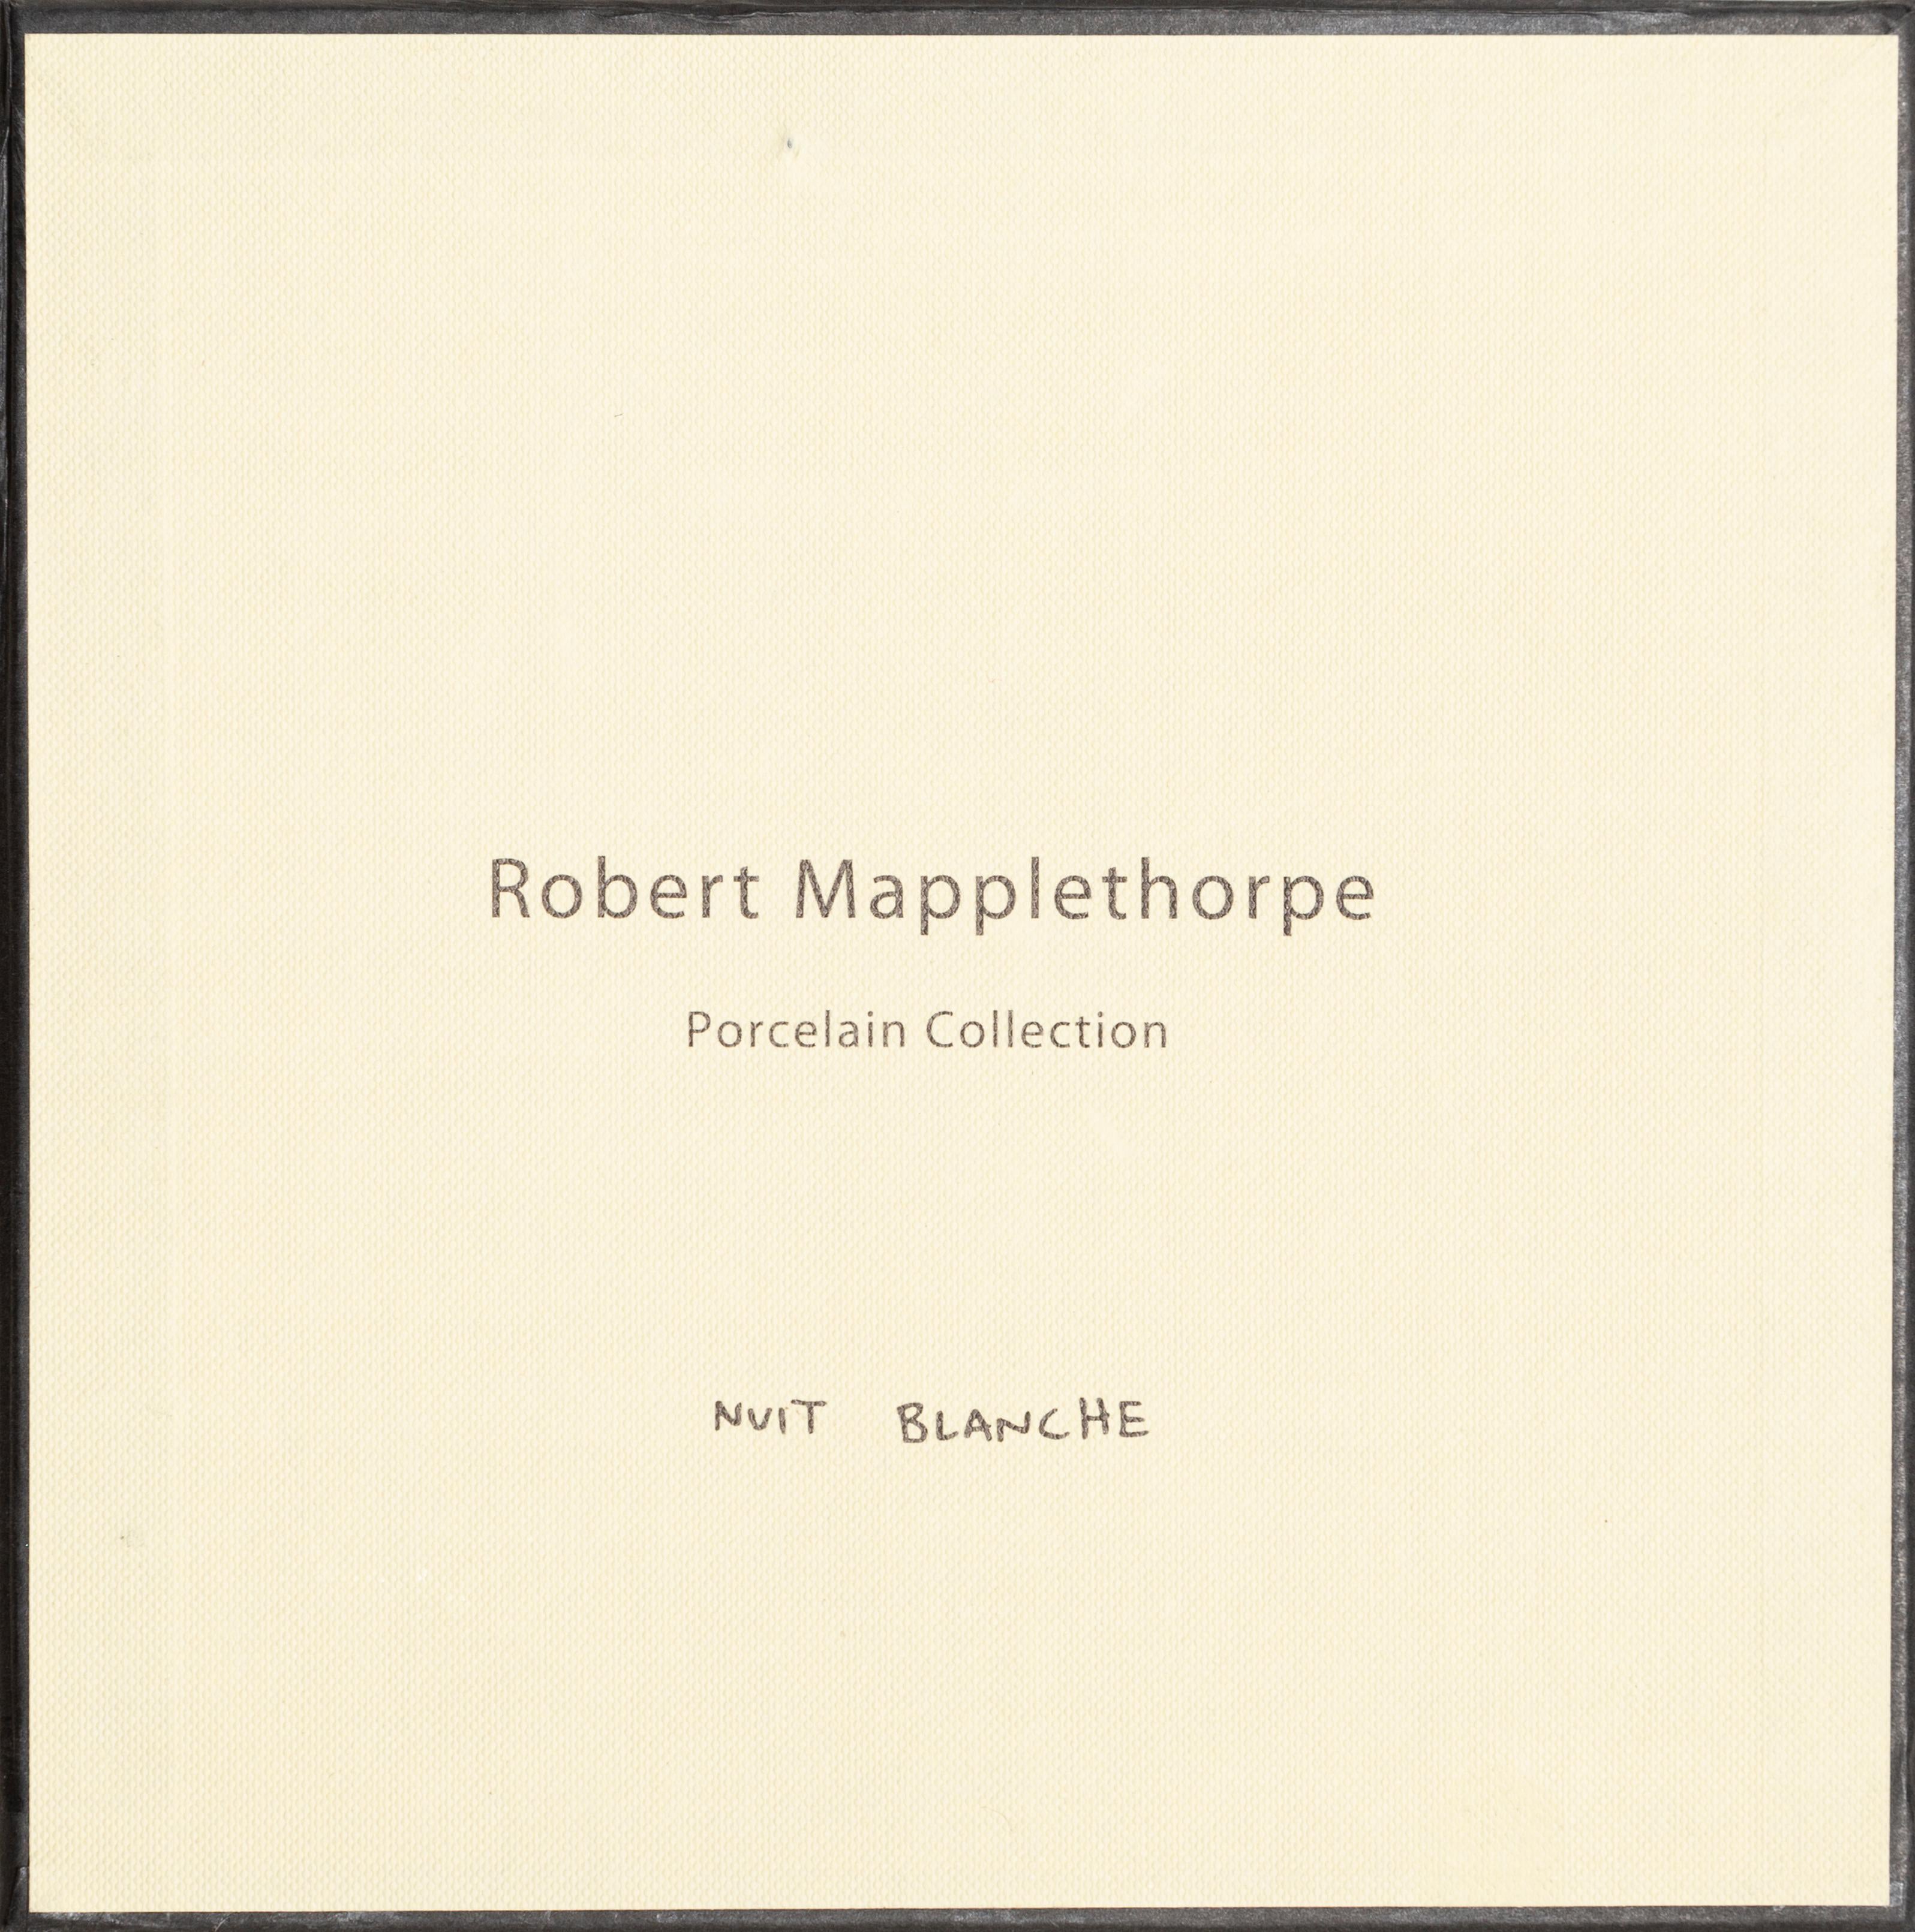 Robert Mapplethorpe, Pair of Porcelain Plates 1